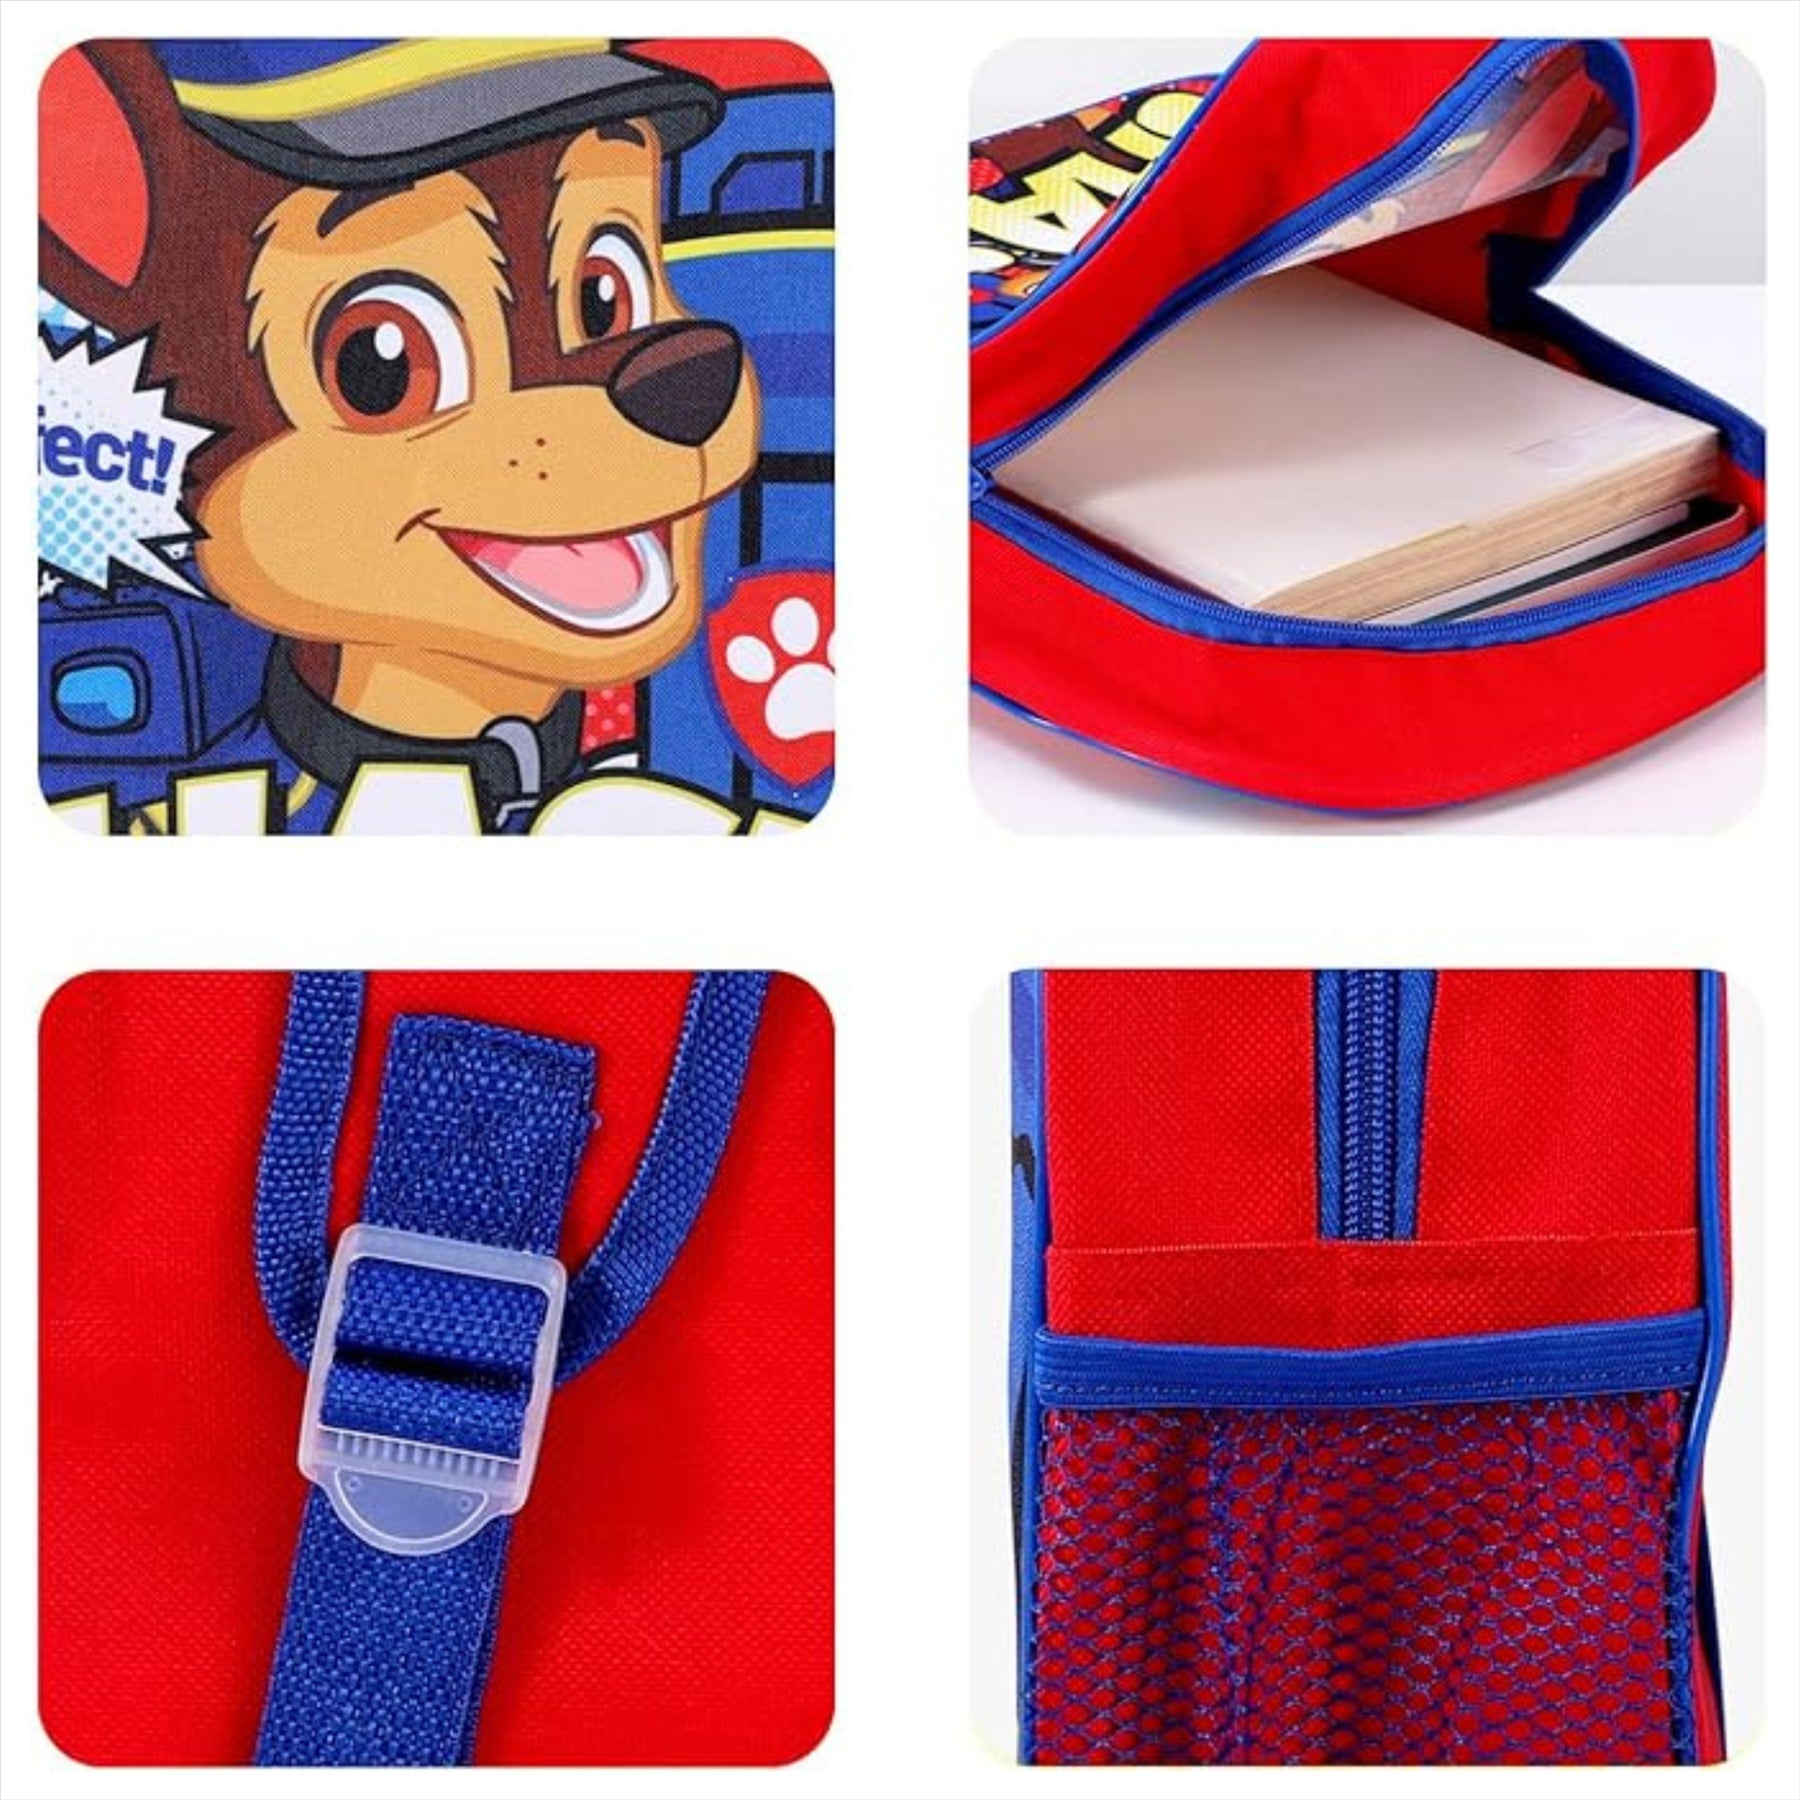 Paw Patrol Chase Junior Backpack - Kids Character School Bag with Mesh Side Pocket - Toptoys2u